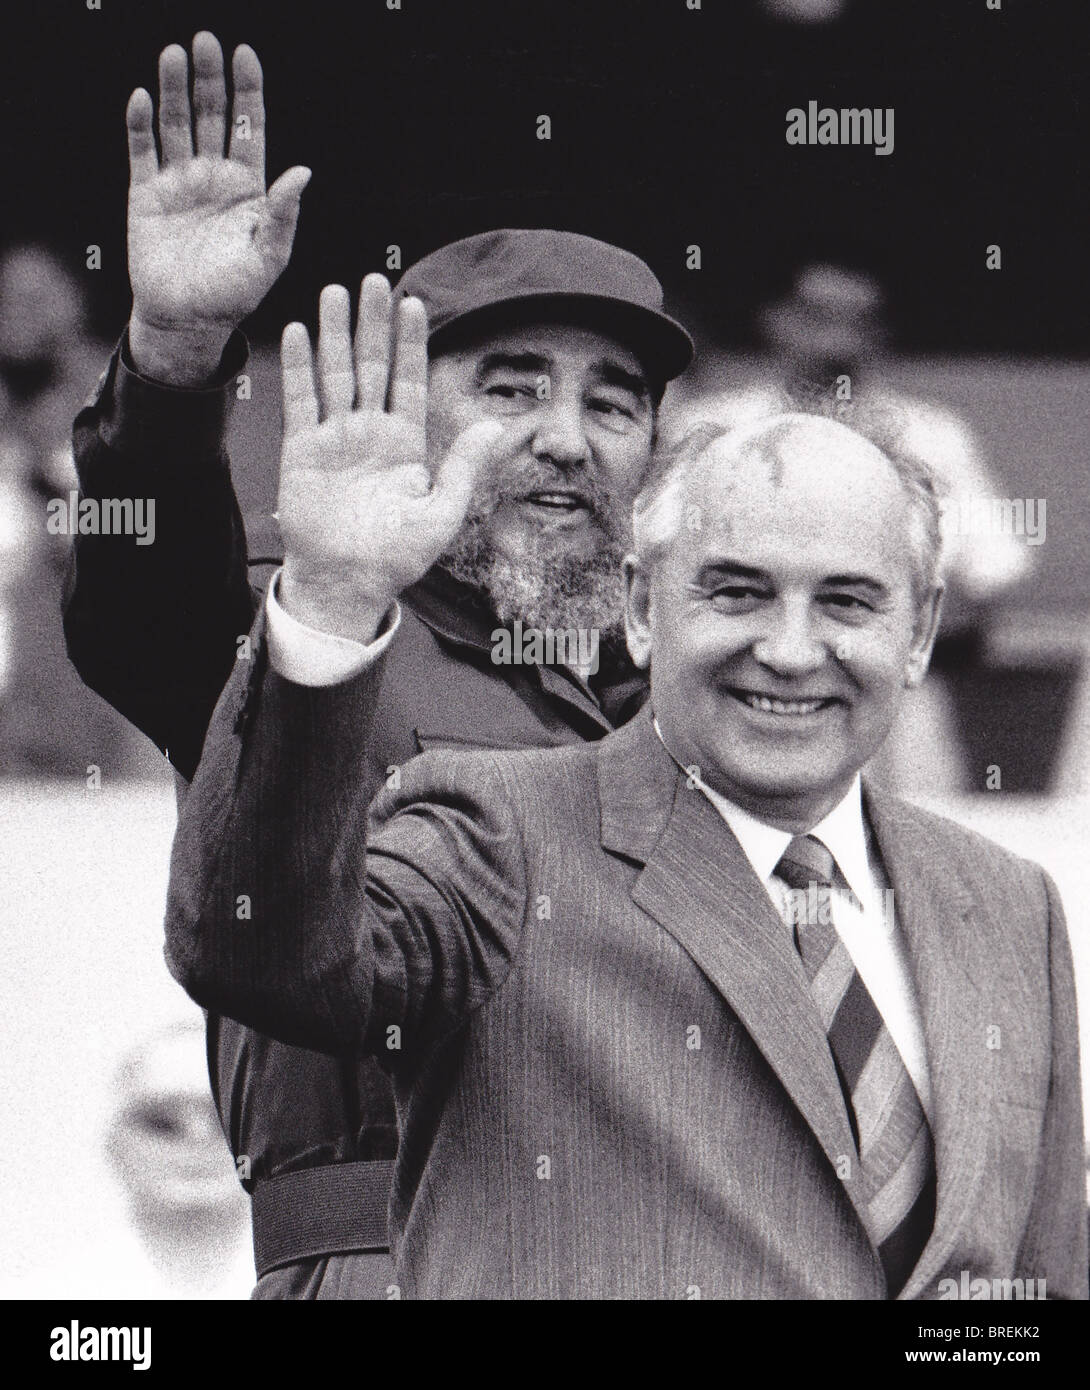 CUBA. LATE PRESIDENT FIDEL CASTRO AND EX PREMIER GORBACHEV IN  HAVANA IN 1989 BEFORE COLLAPSE OF SOVIET UNION Stock Photo